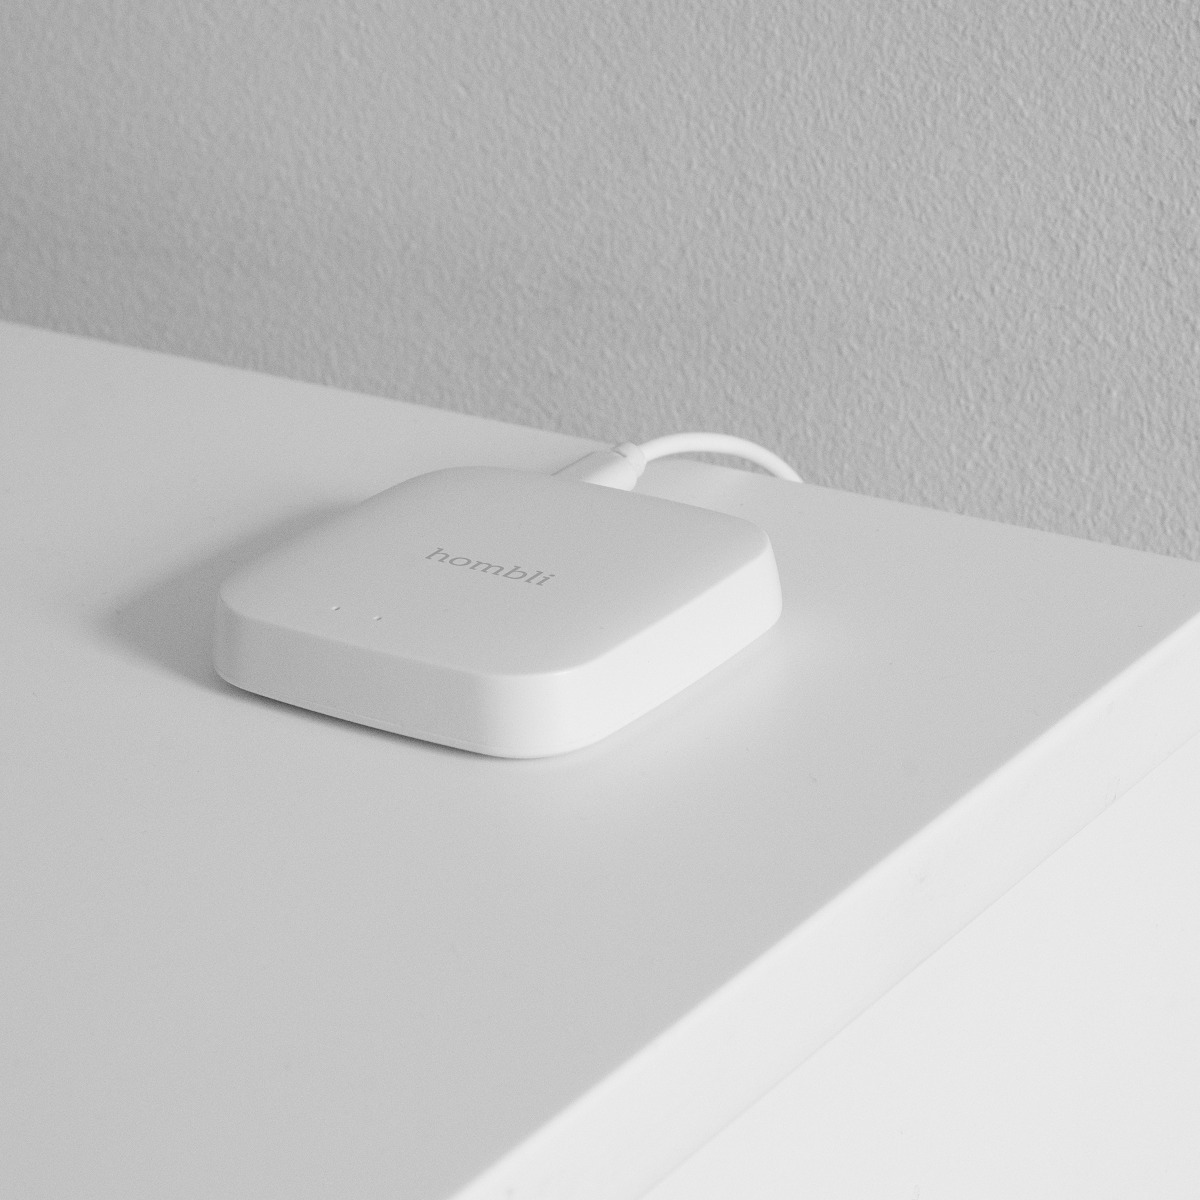 Radiator Heizkörperthermostat, Smart Smart HOMBLI Thermostat White